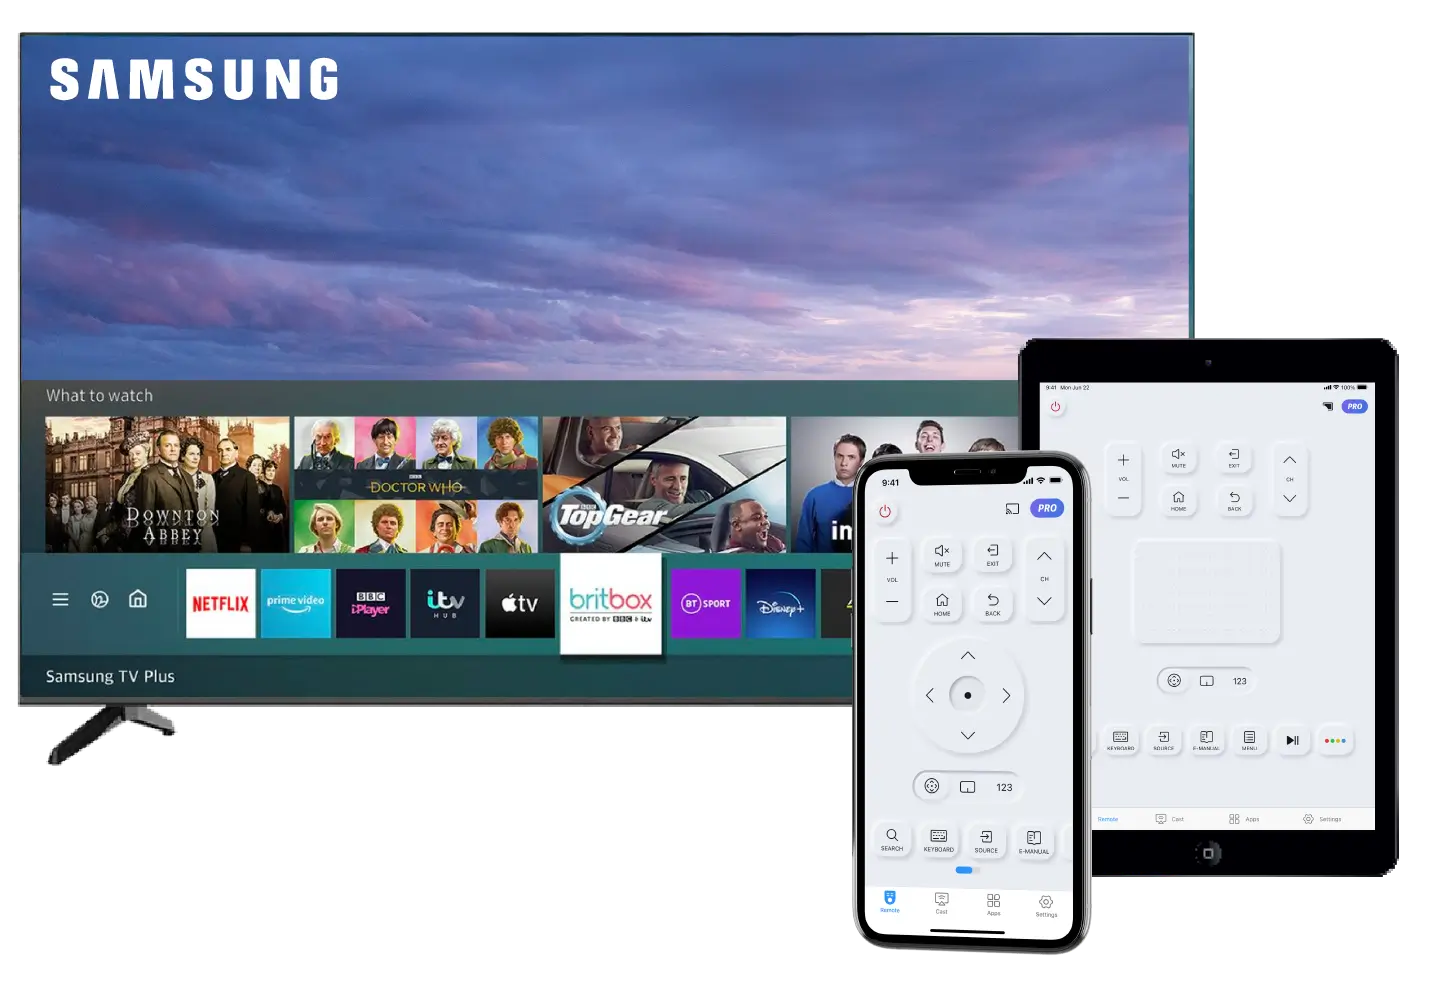 Control Remoto para TV Samsung